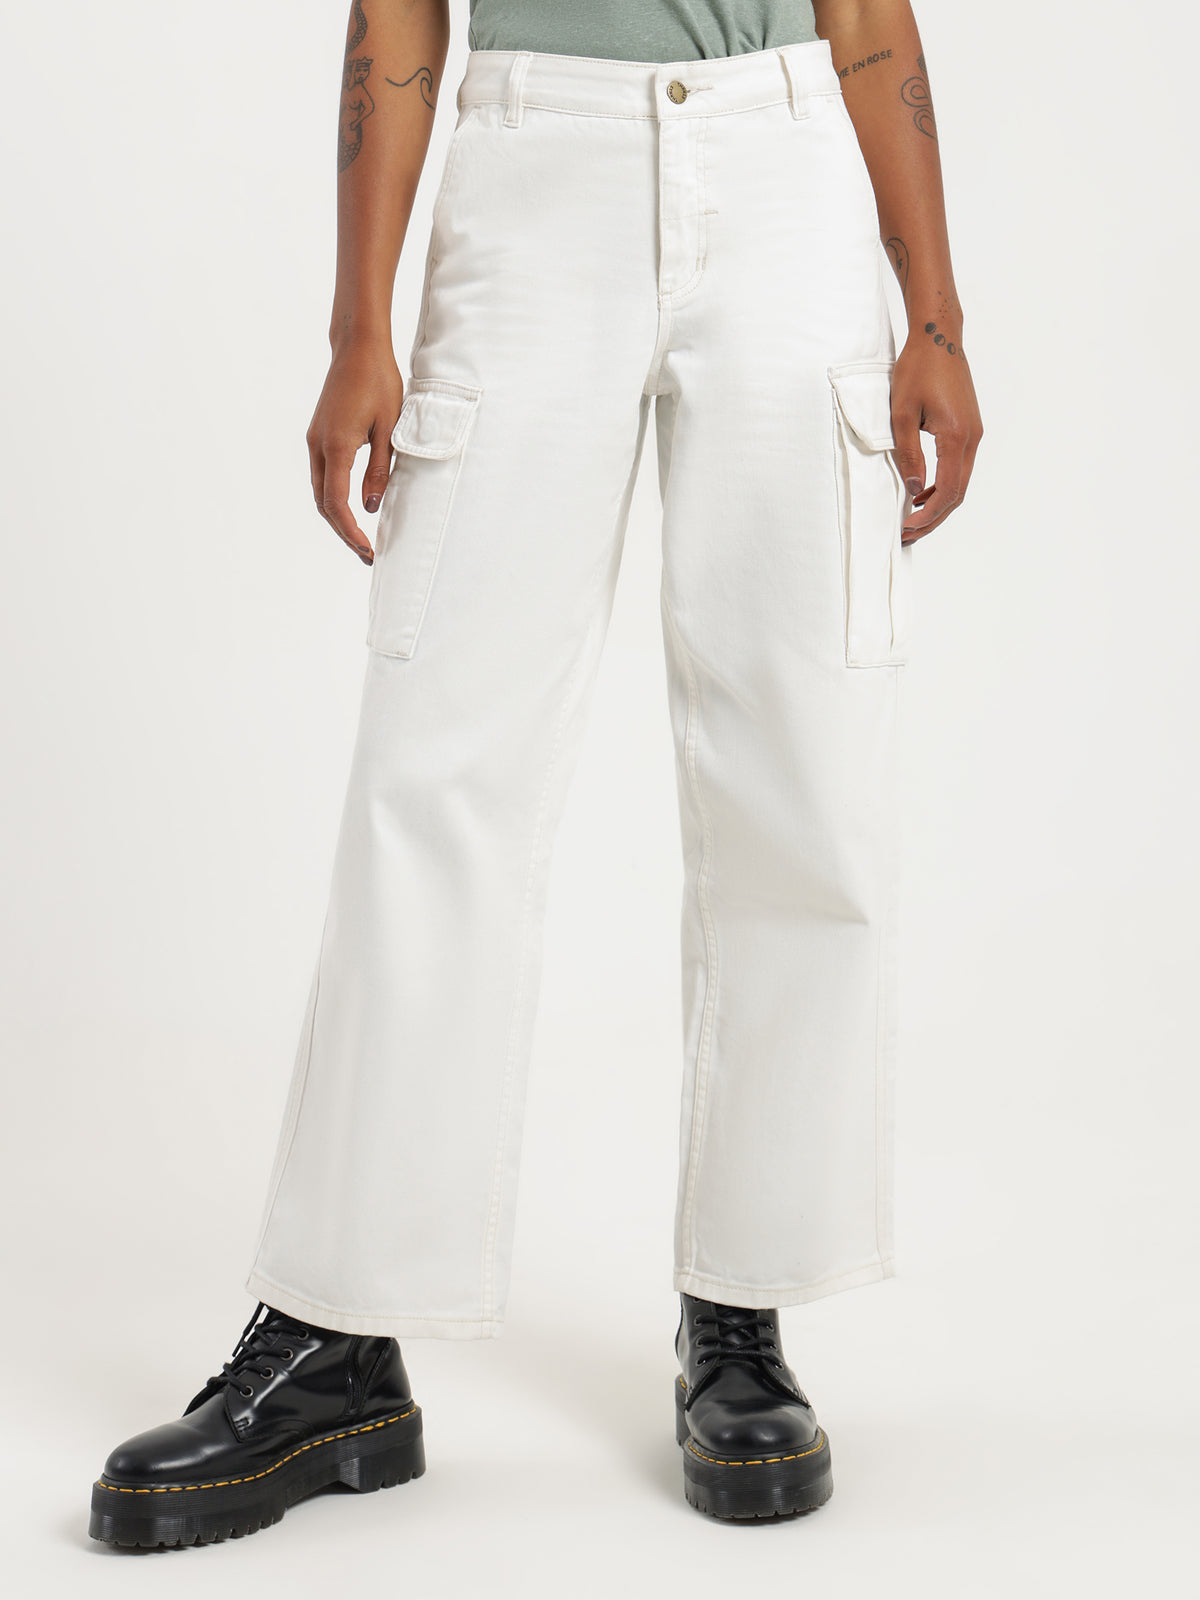 Hard Yakka Union Pants in Unbleached White